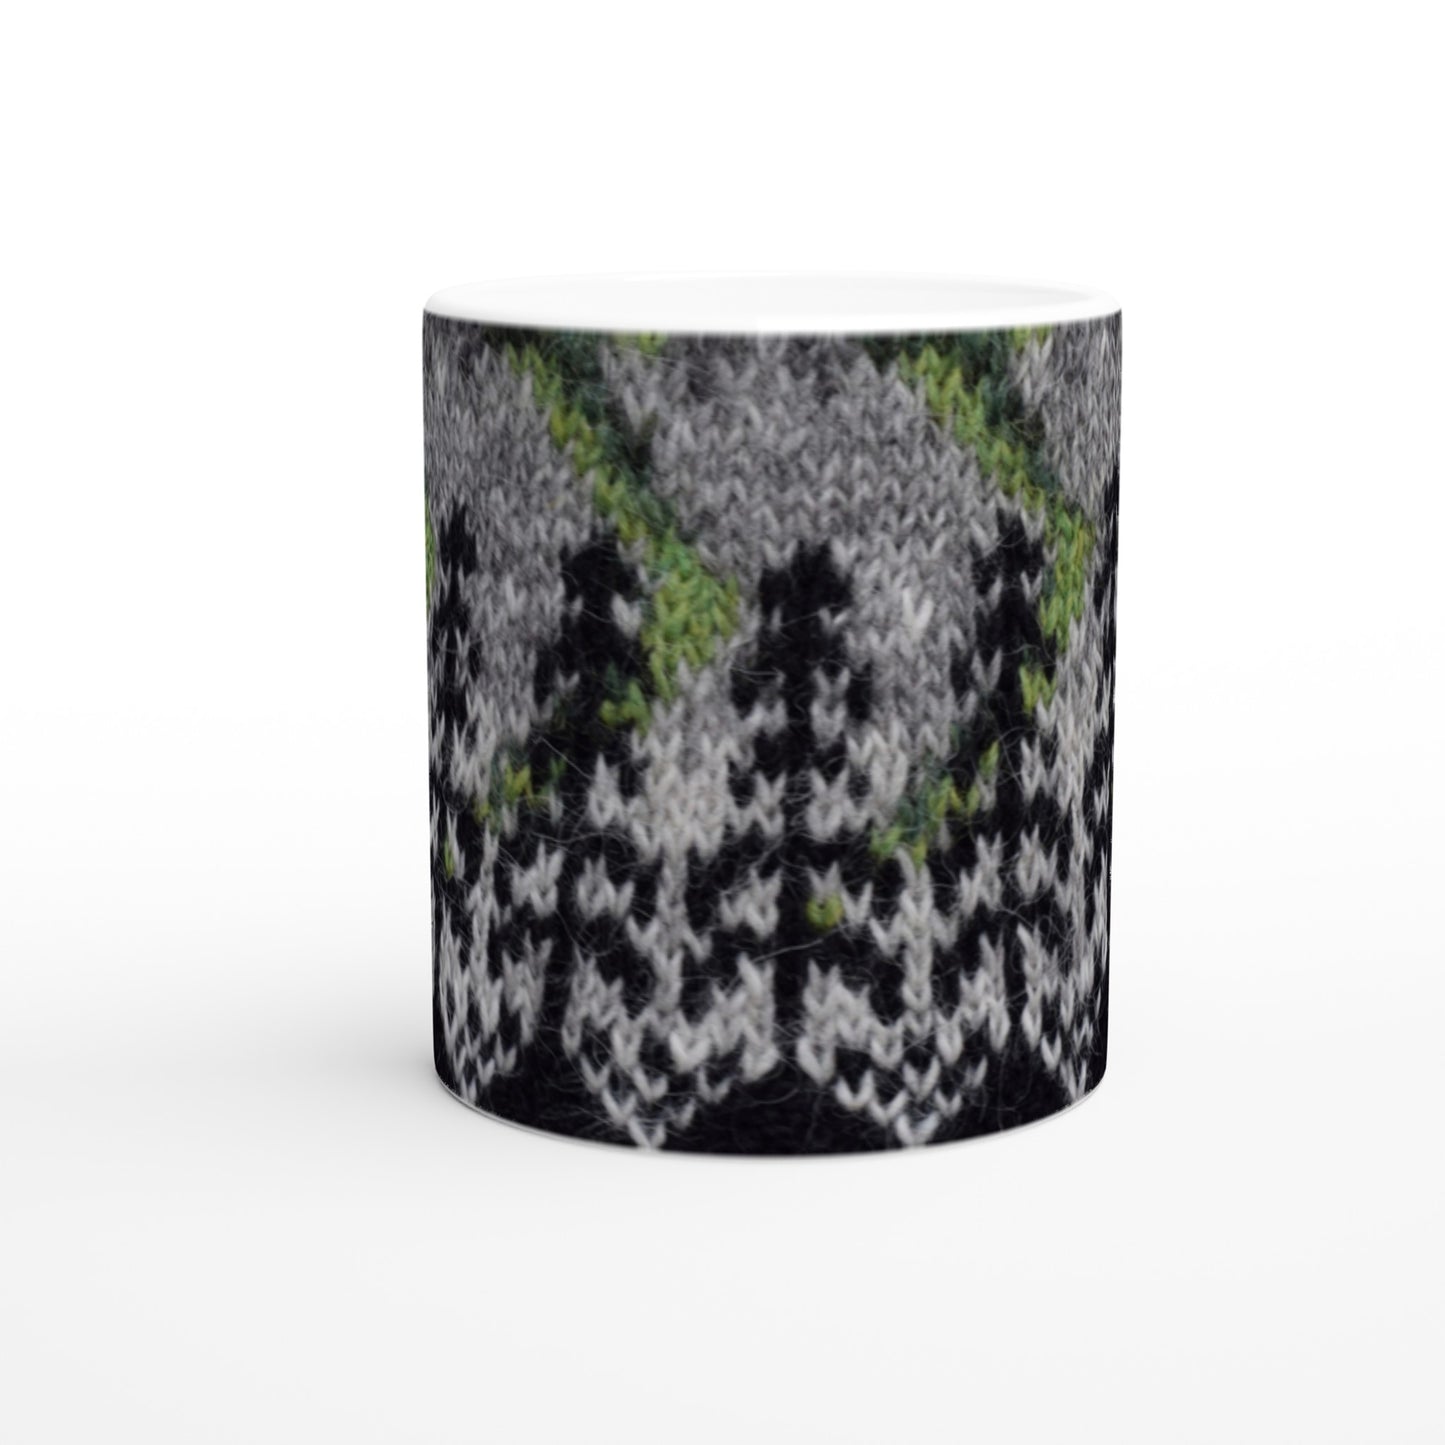 Mug with Icelandic knit pattern - Northern Lights